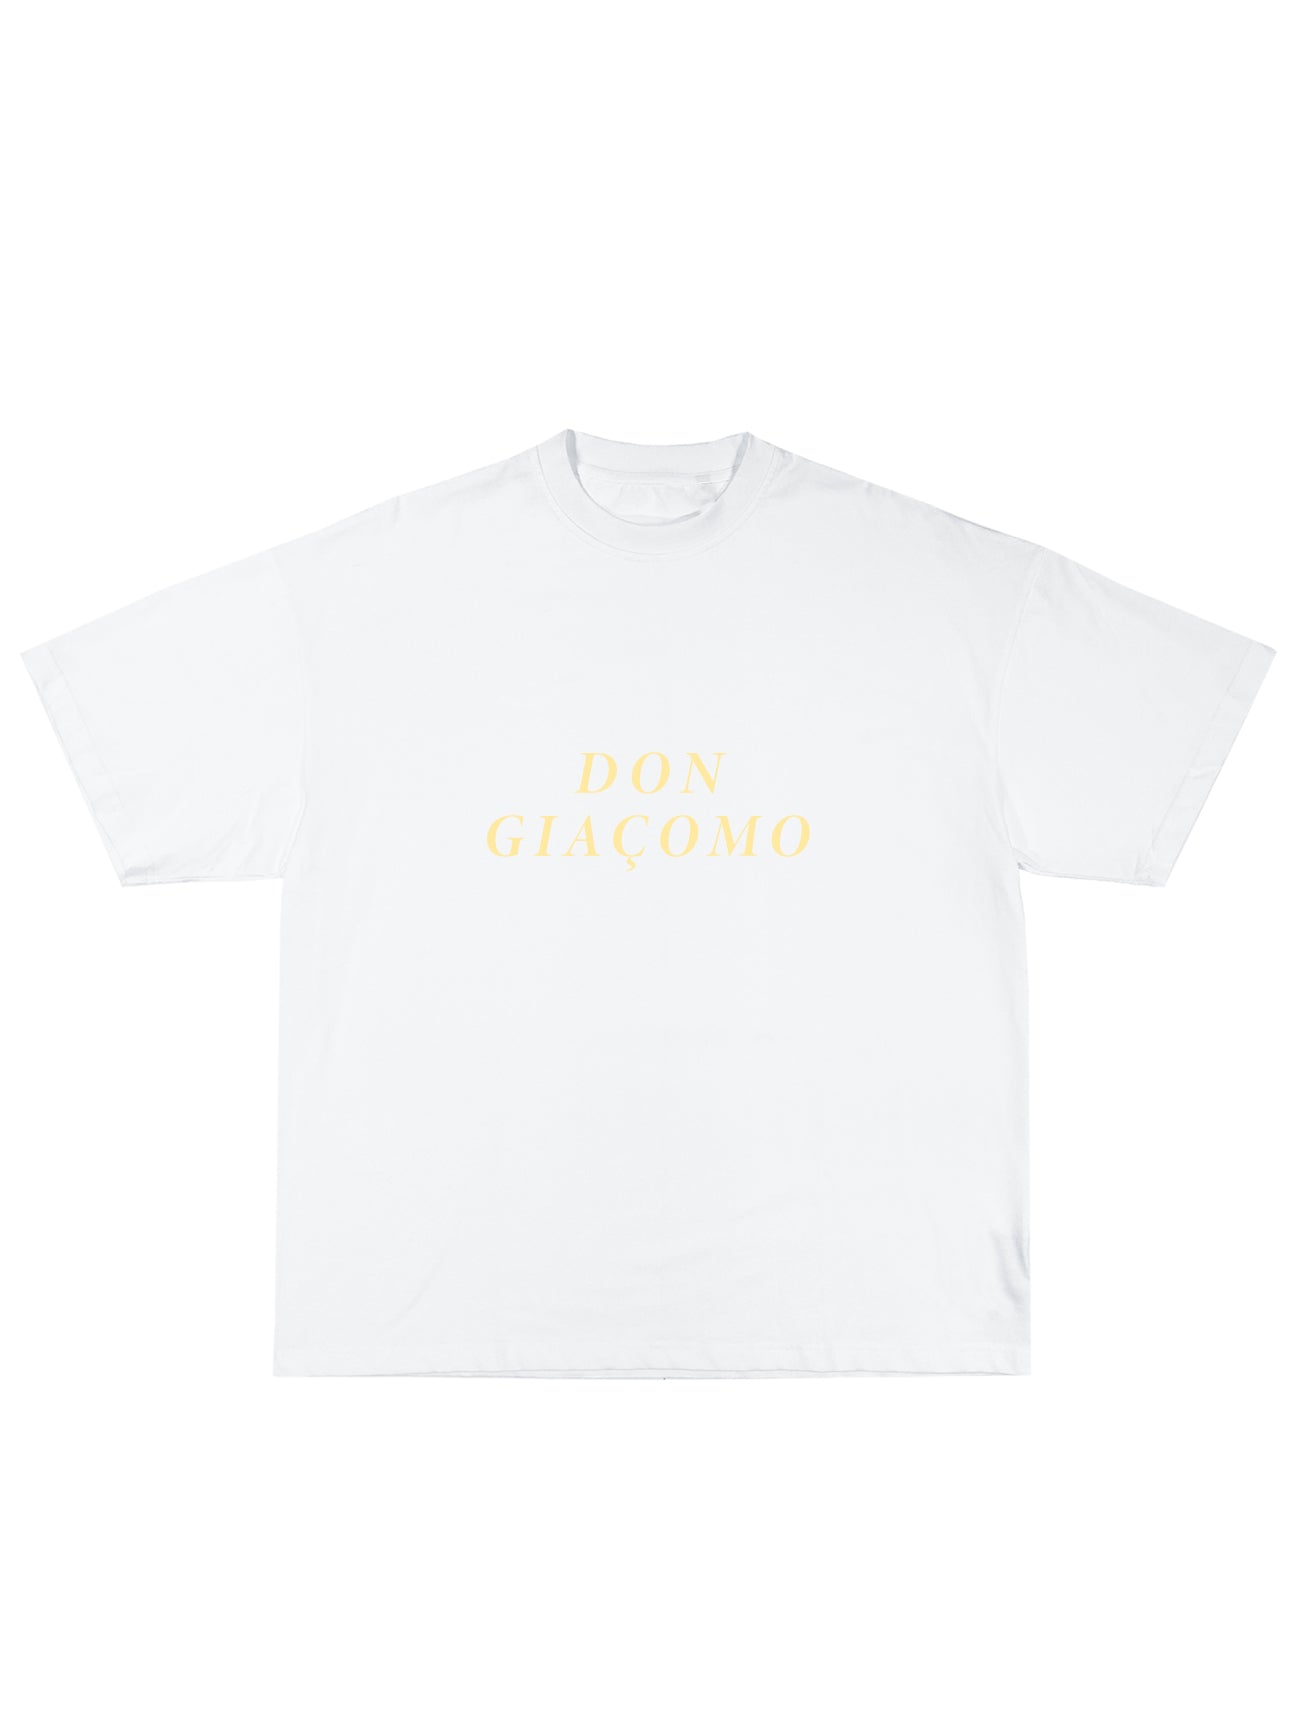 Don Giacomo Cream Circle Graphic T-Shirt (3 colors)